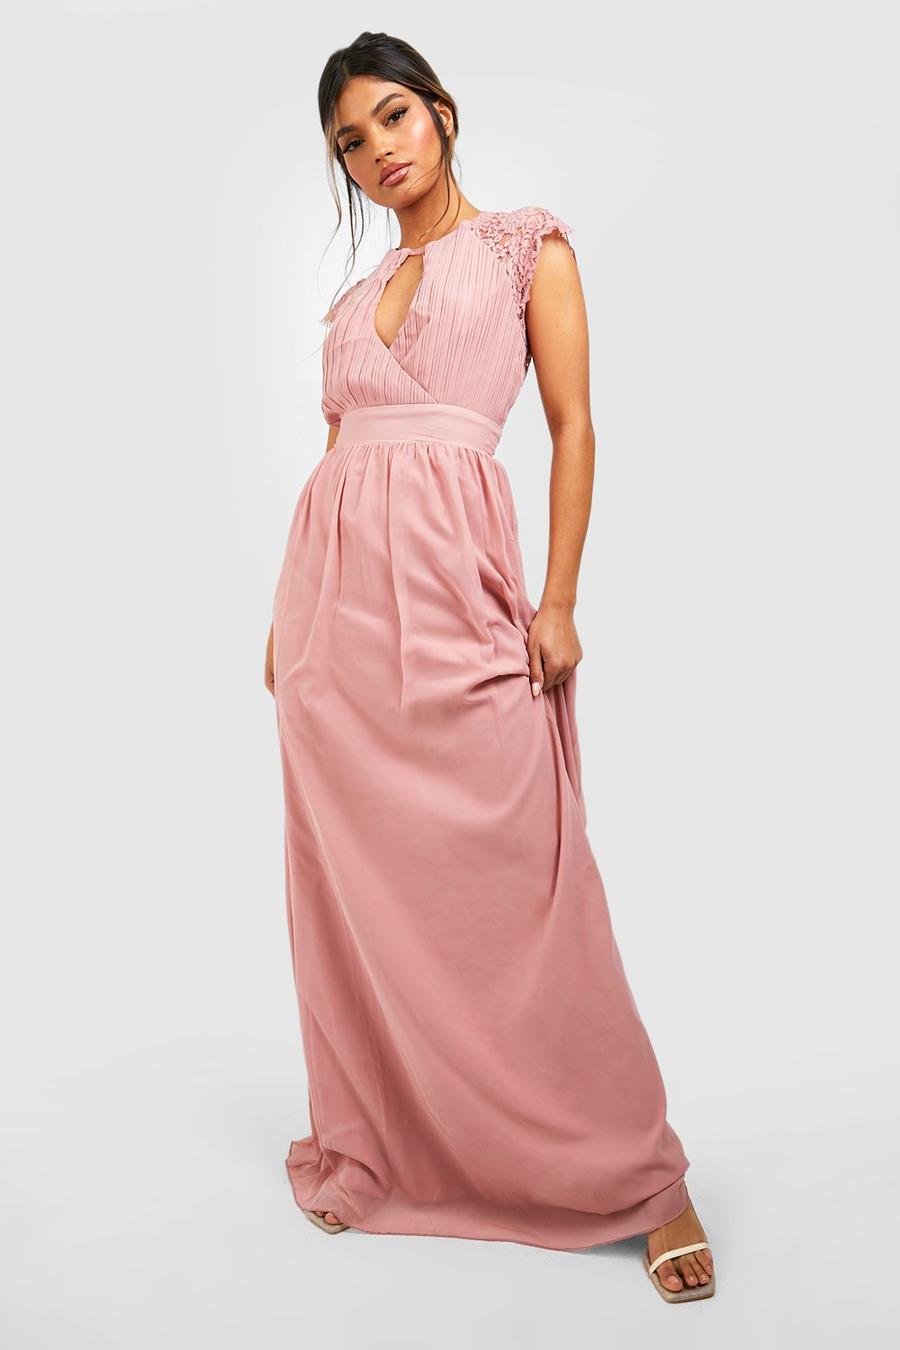 Blush rose Lace Detail Wrap Pleated Maxi Dress